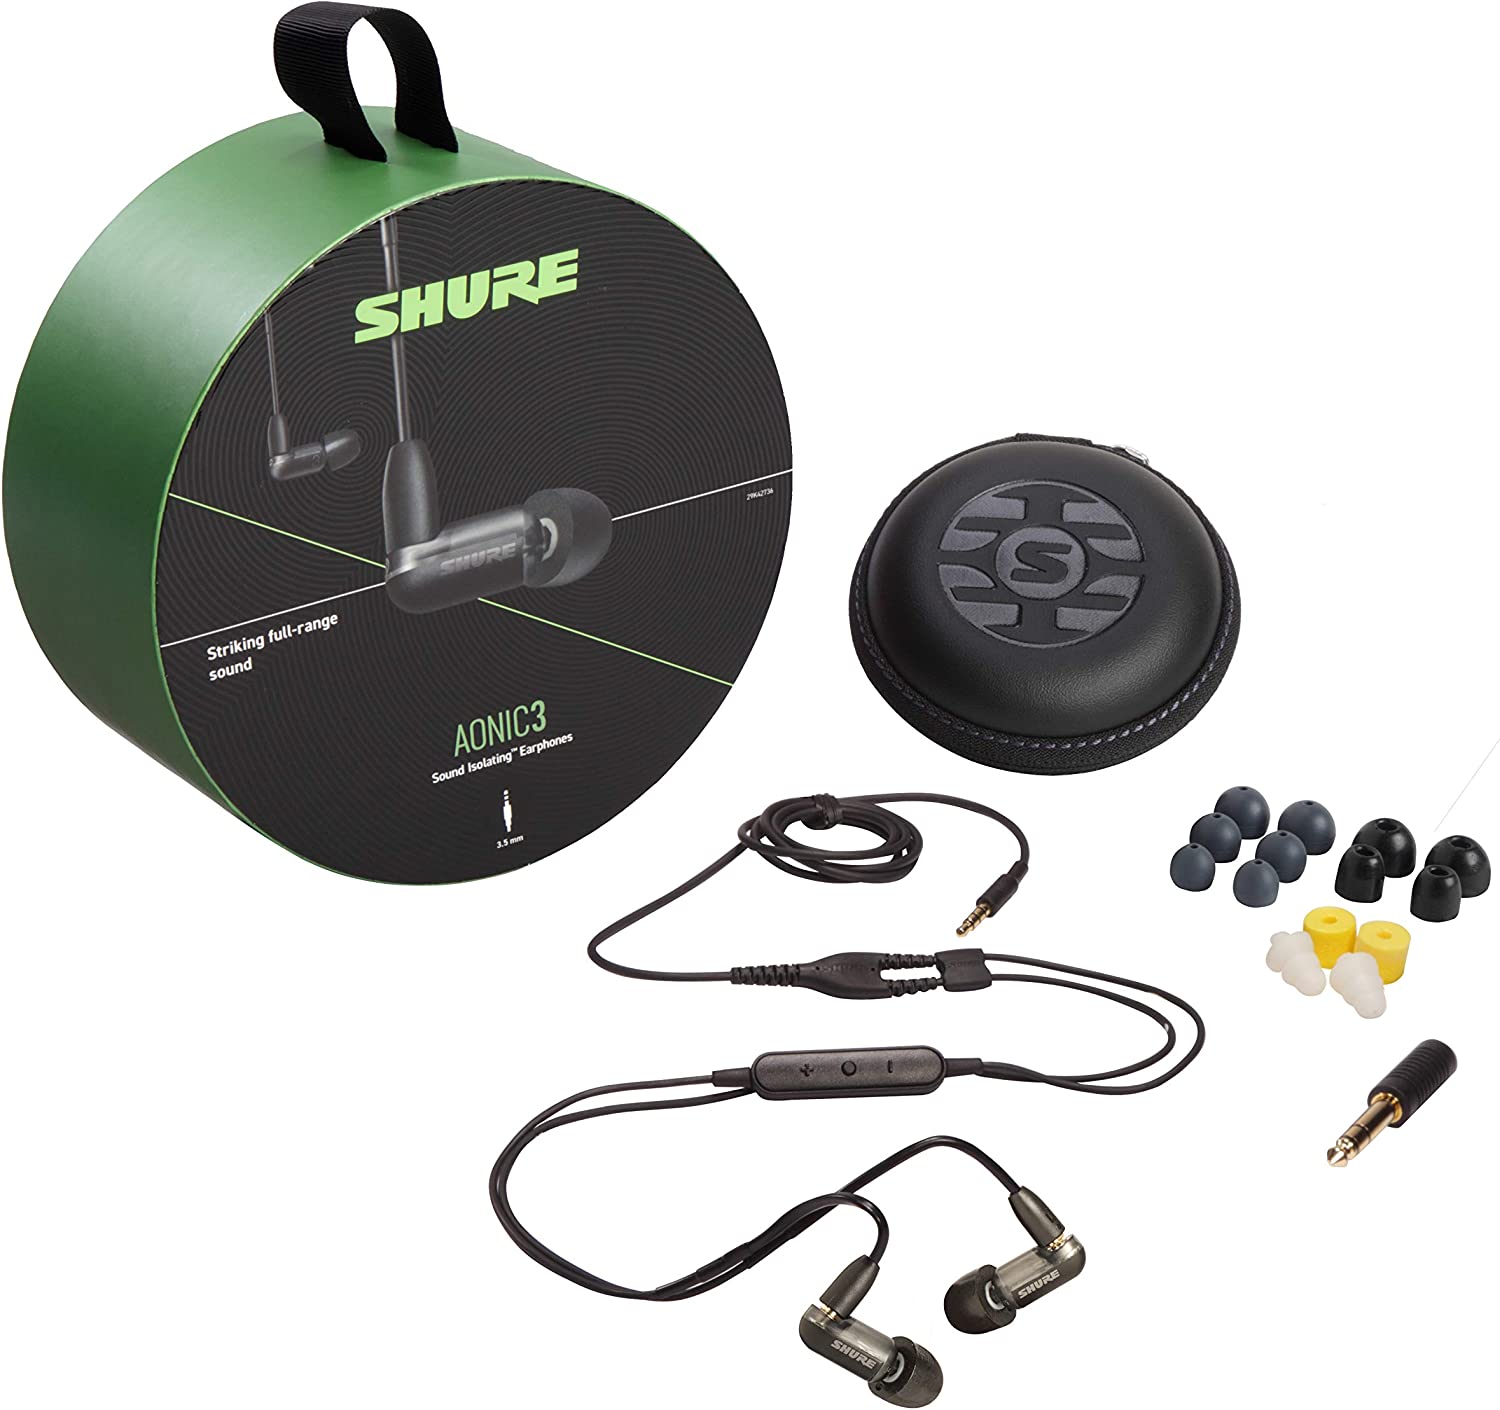 SHURE AONIC 3 SOUND ISOLATING EARPHONES - BLACK